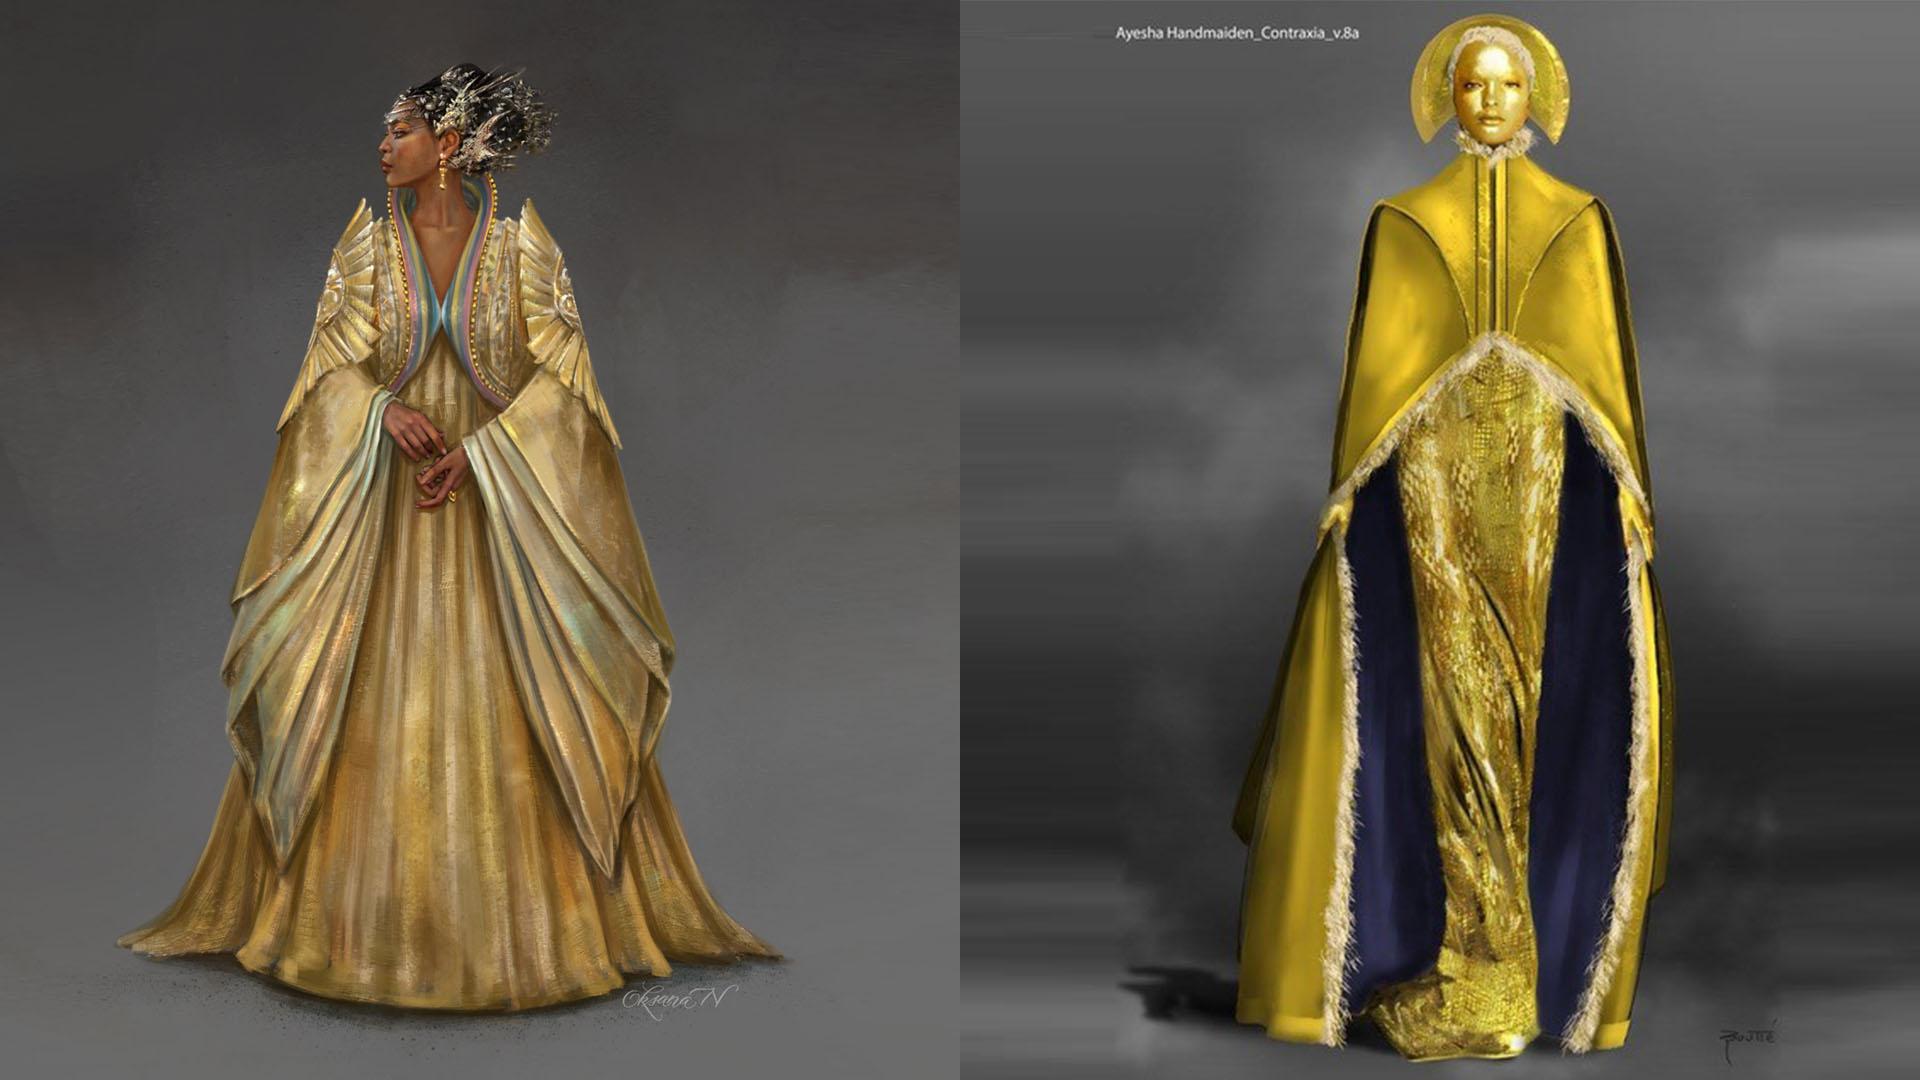 Left: Costume design by Oksana Nedavniaya. Right: Costume design by Phillip Boutte Jr.